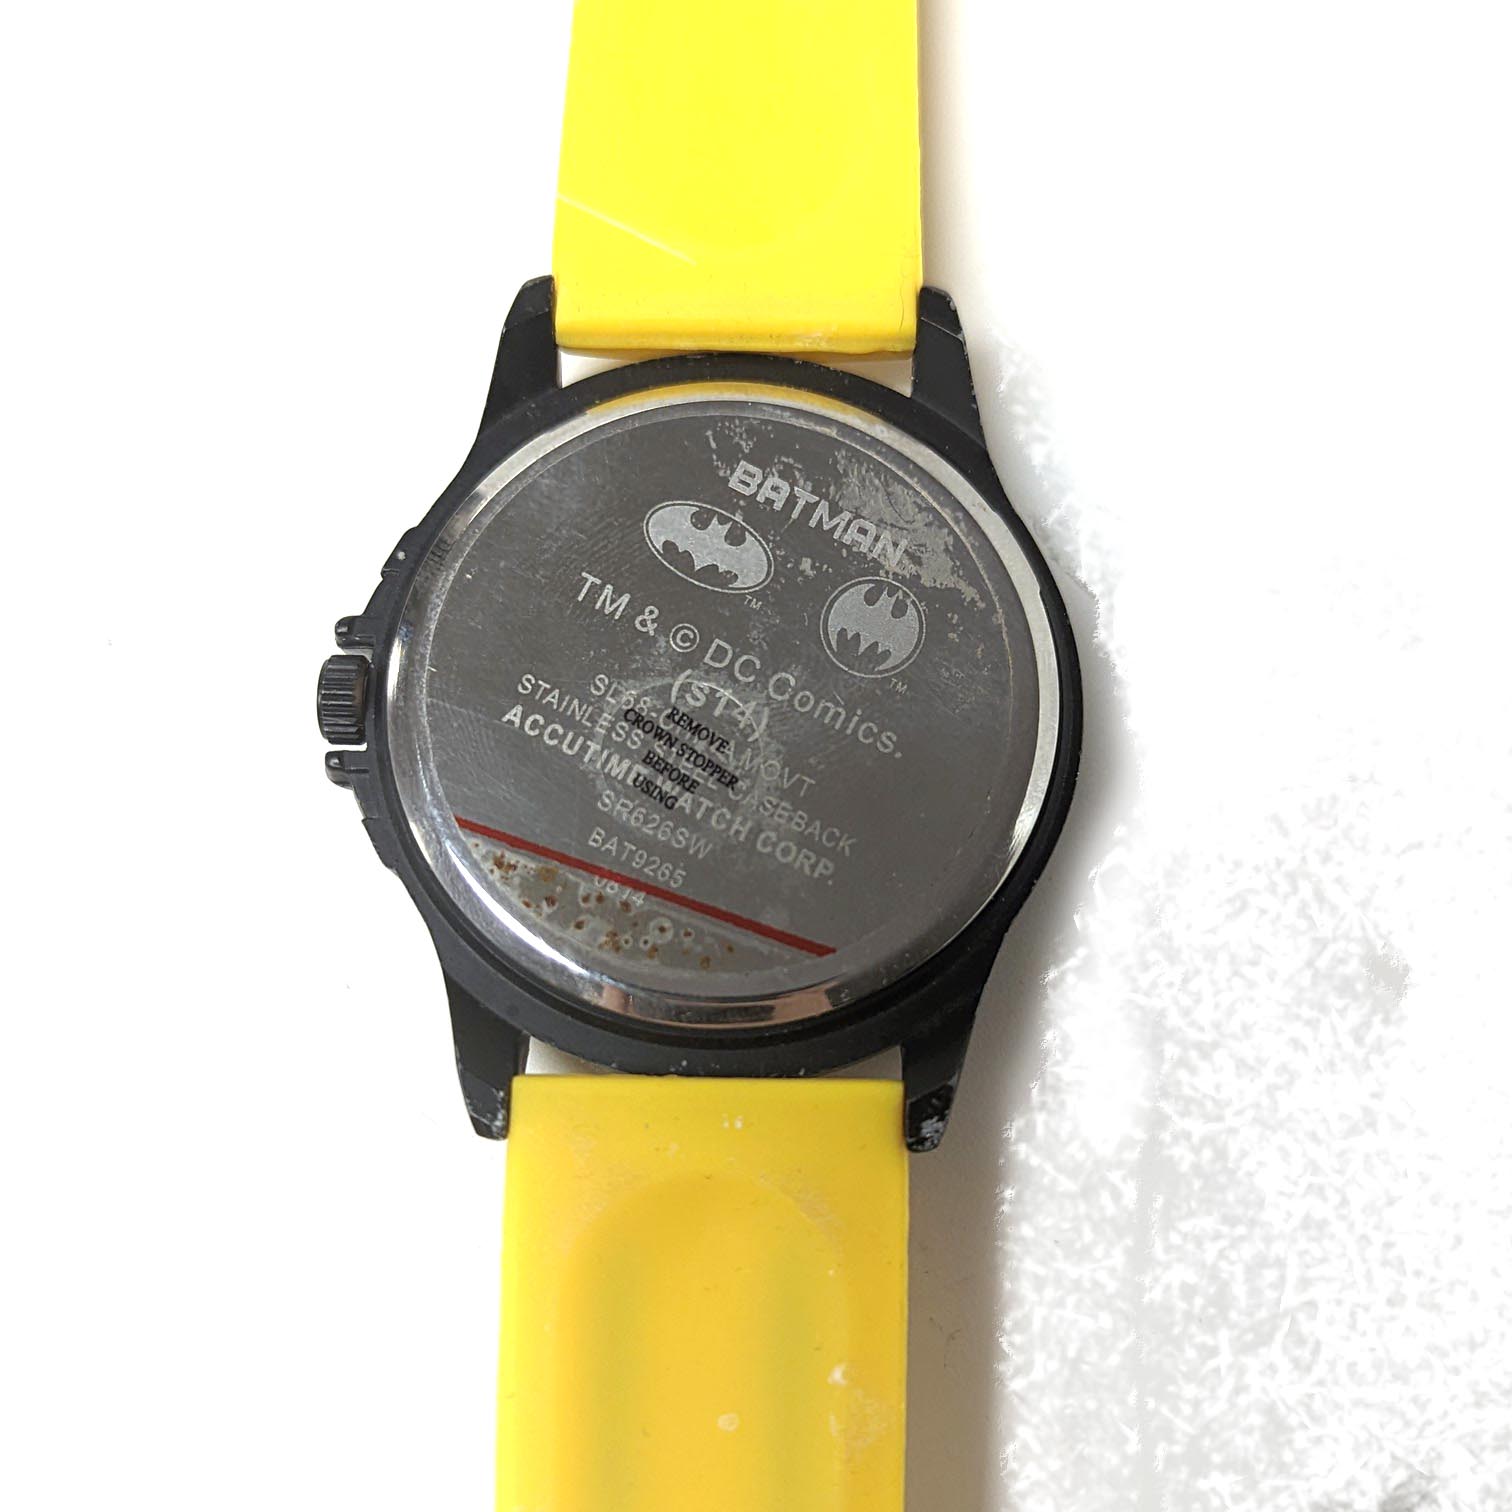 Batman Wrist Watch Accutime TM & DC Comics Yellow Silicone Band BAT9265